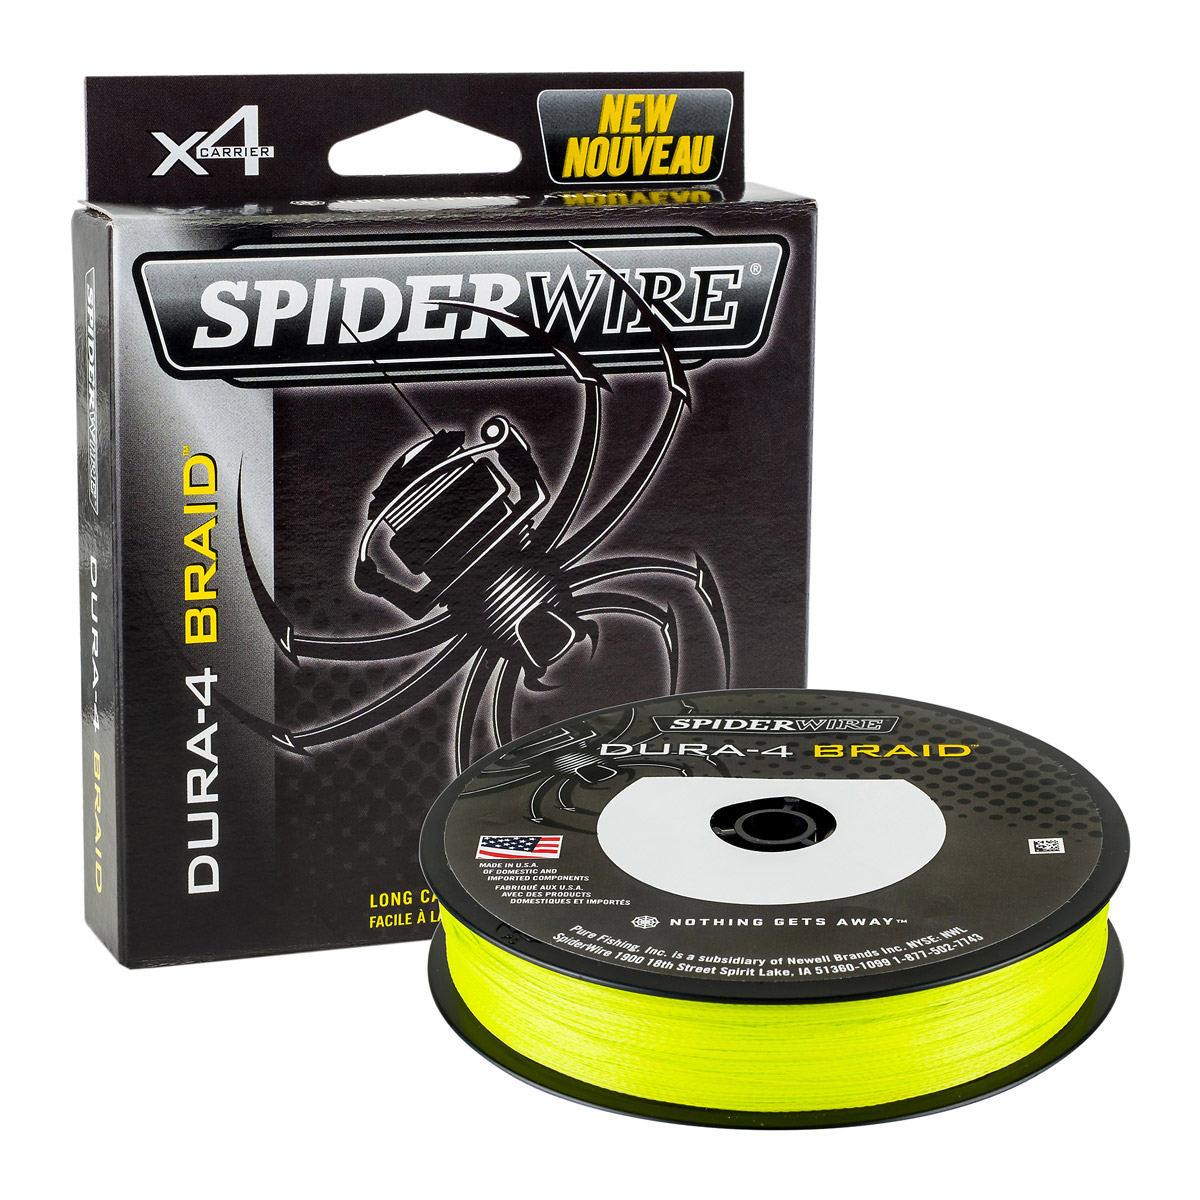 Spiderwire dura 4 Braid Yellow  -  0.10 mm -  0.14 mm -  0.20 mm -  0.30 mm -  0.17 mm -  0.12 mm -  0.25 mm